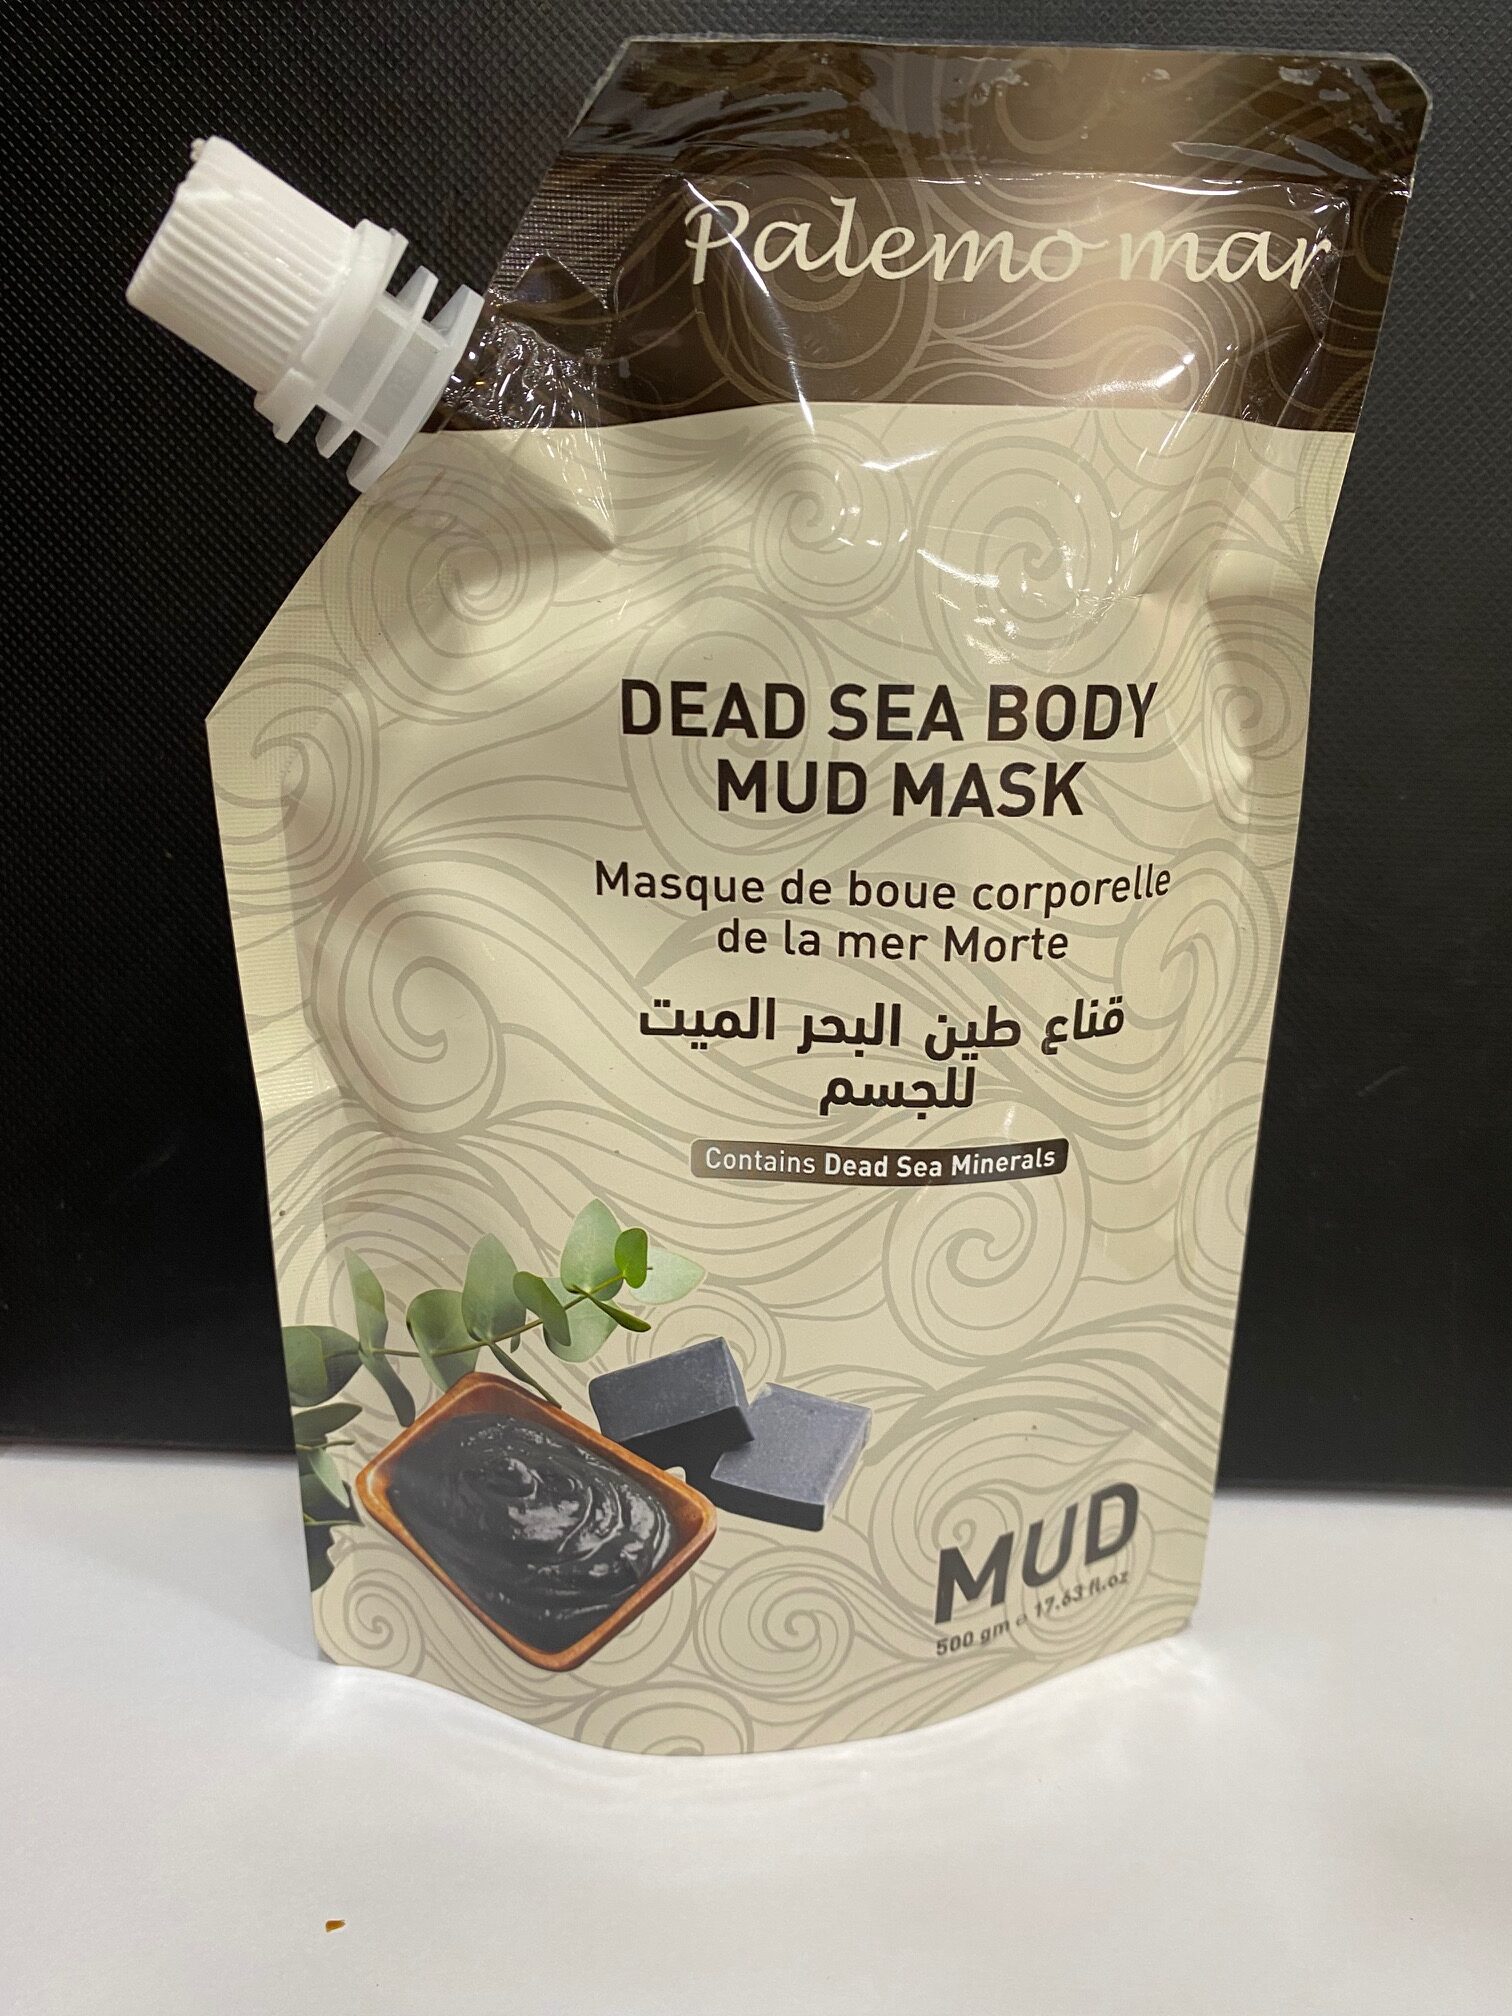 BODY MUD MASK – Palemo Mar Dead Sea products